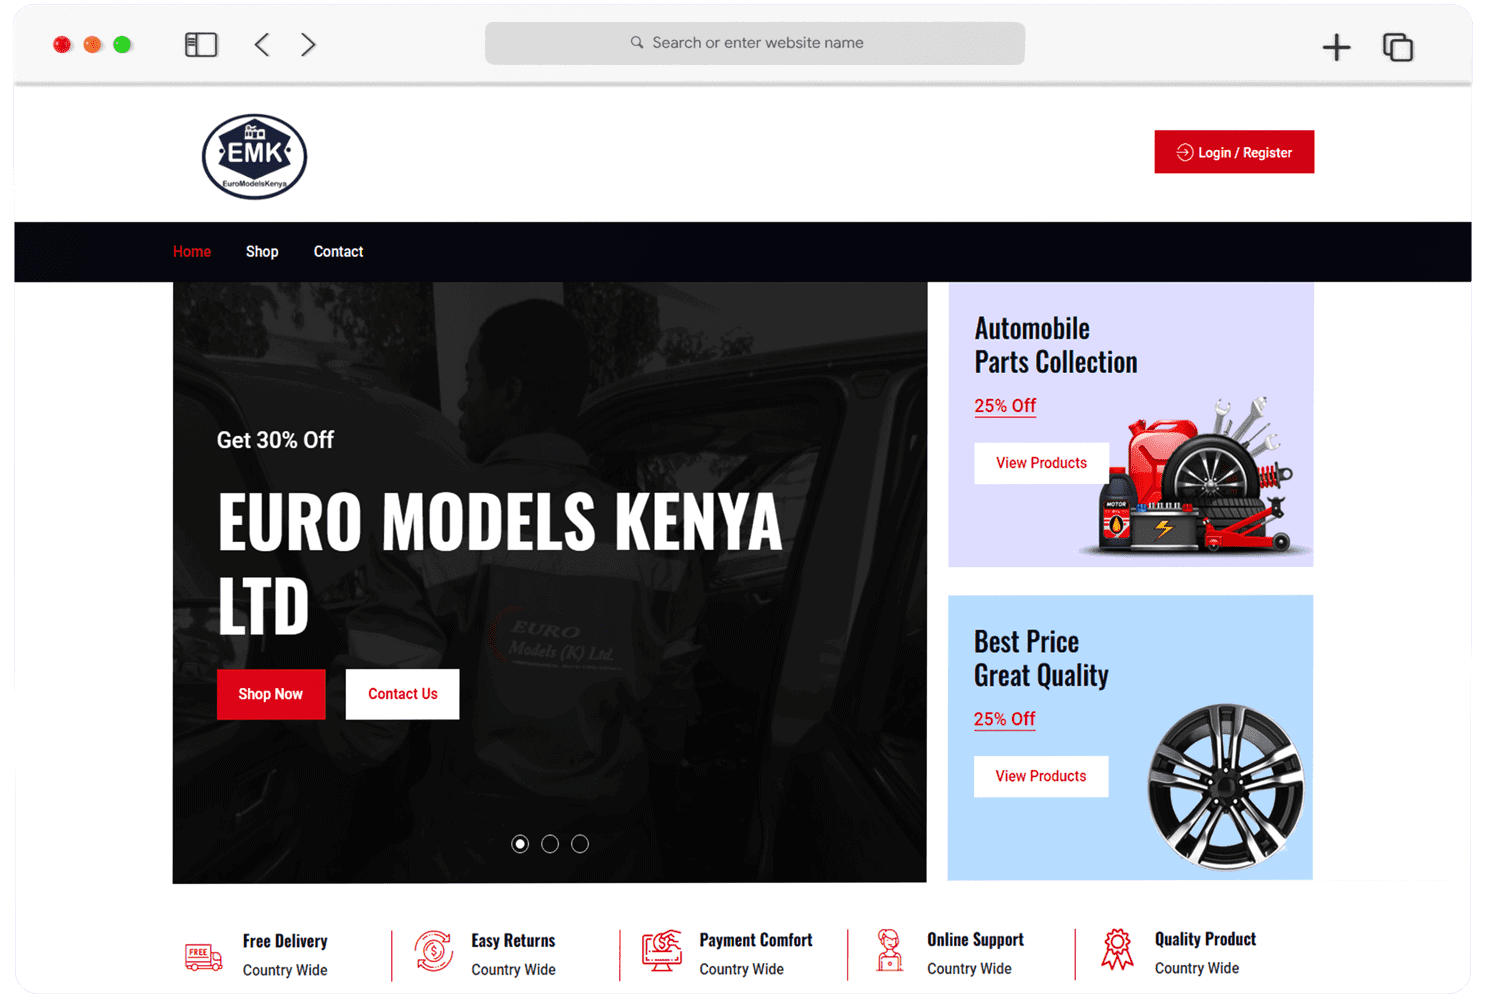 Euro models Kenya Ltd